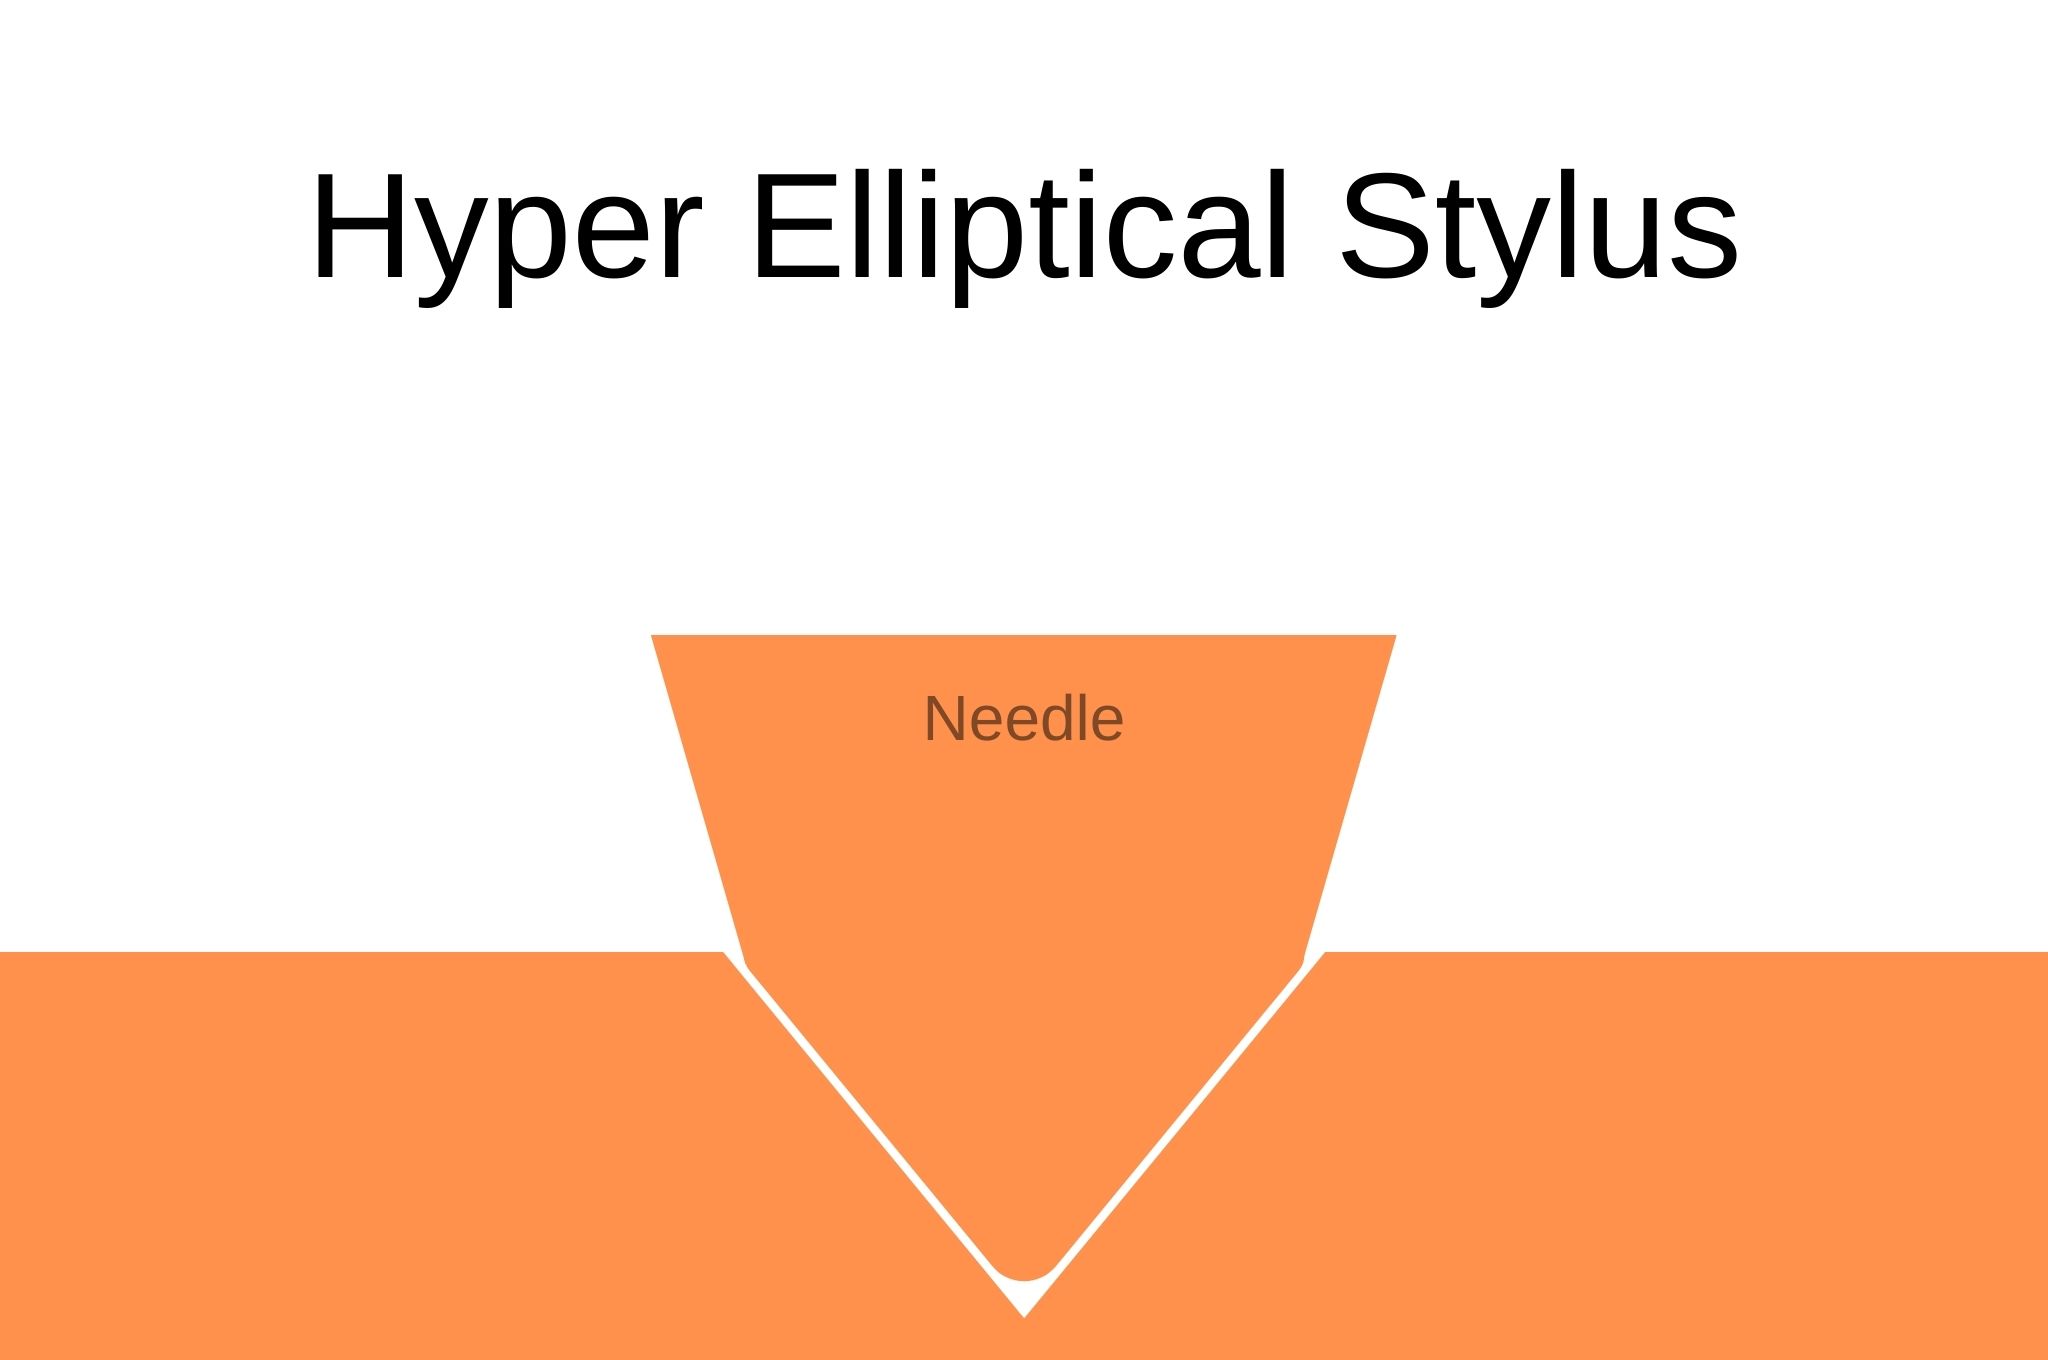 Hyper Elliptical Stylus